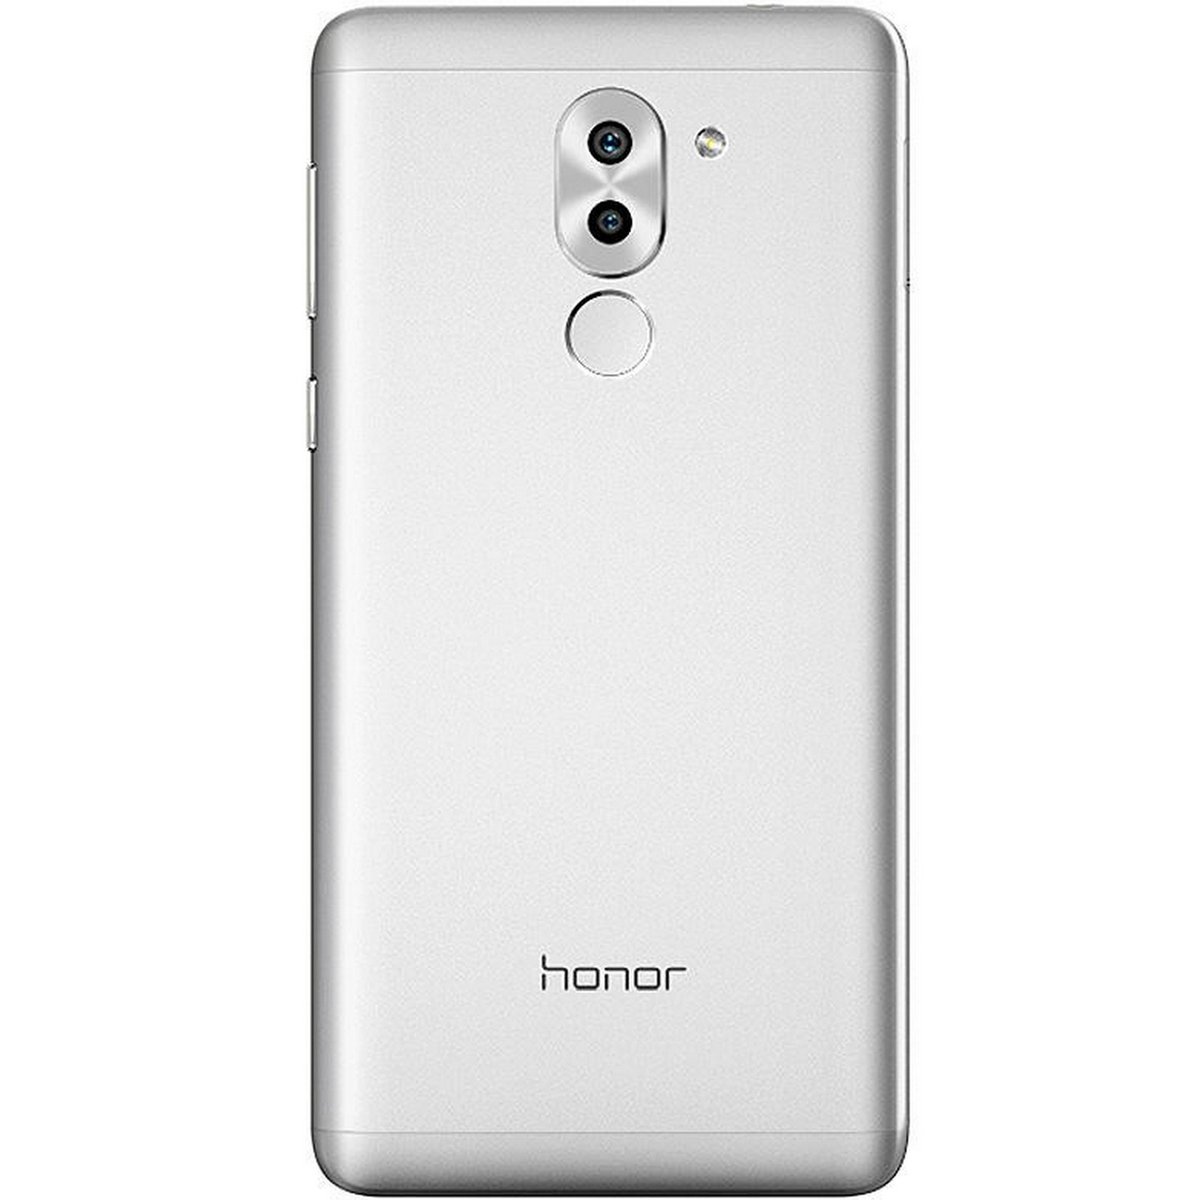 Huawei Honor 6X 4G 32GB Silver